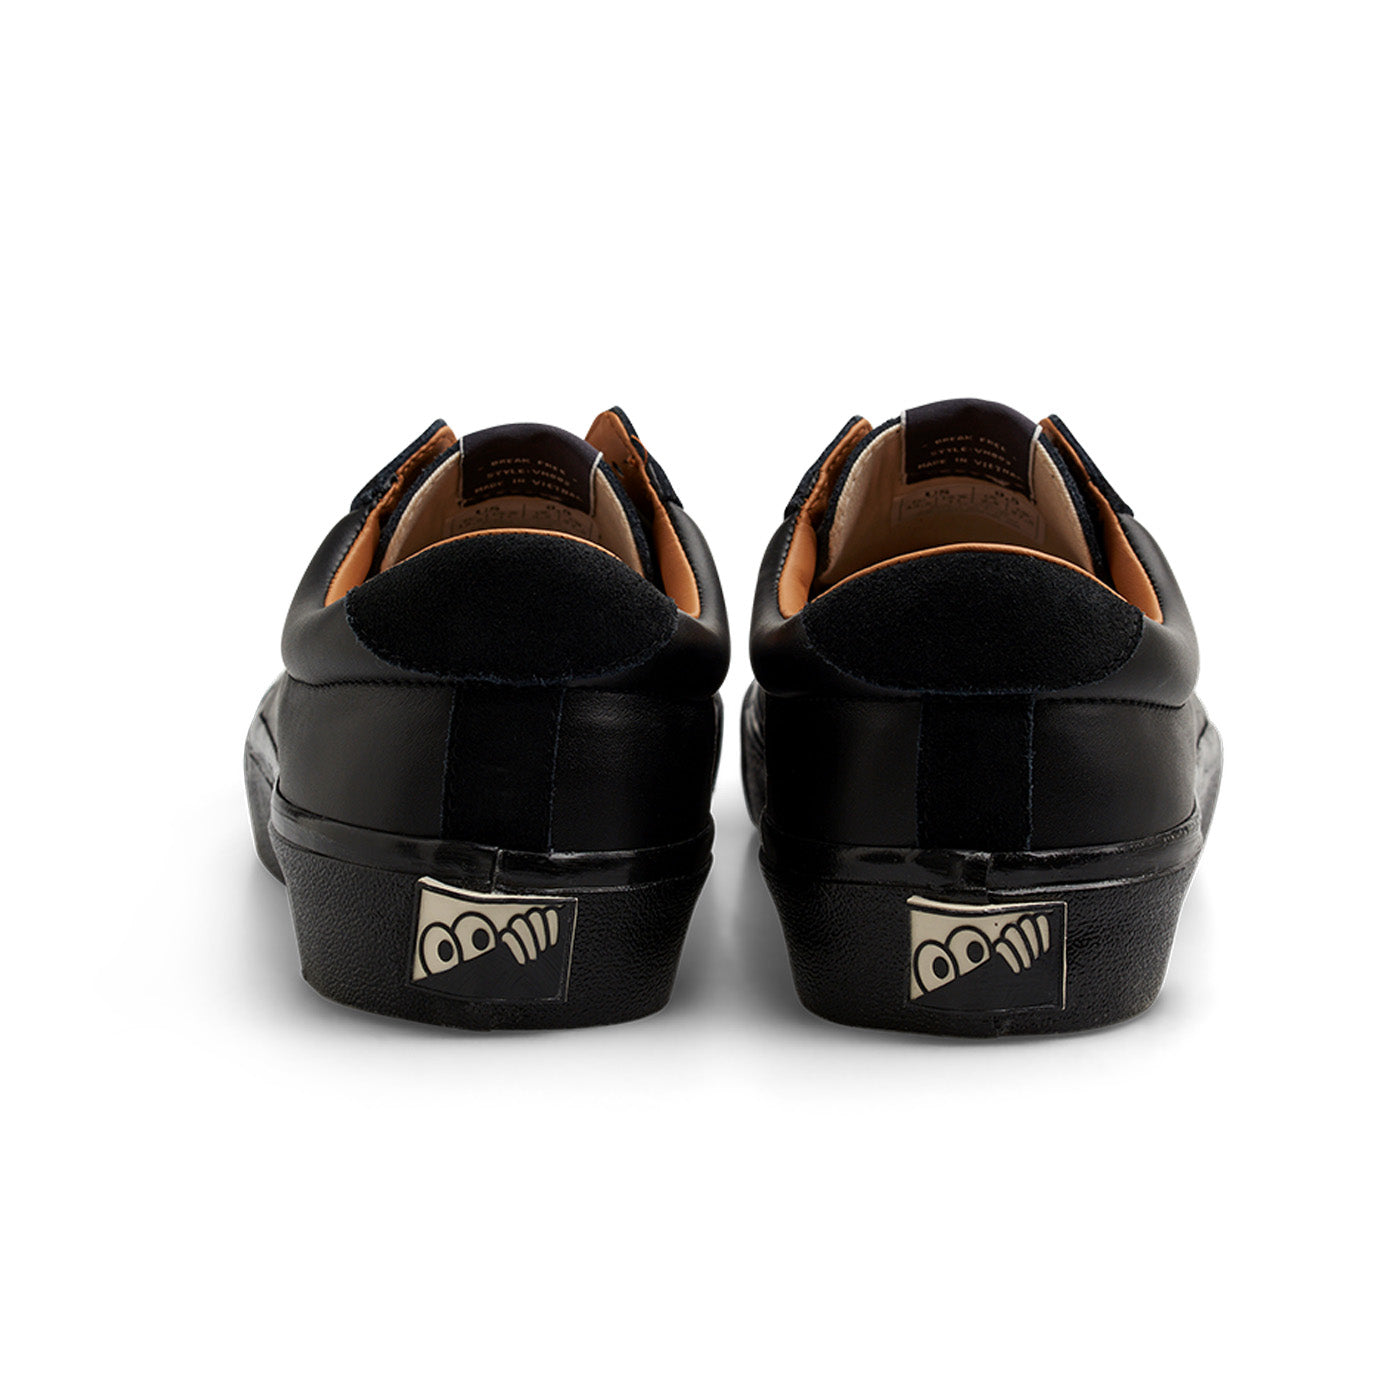 VM004 Milic Shoe Leather / Suede, Duo Black / Black